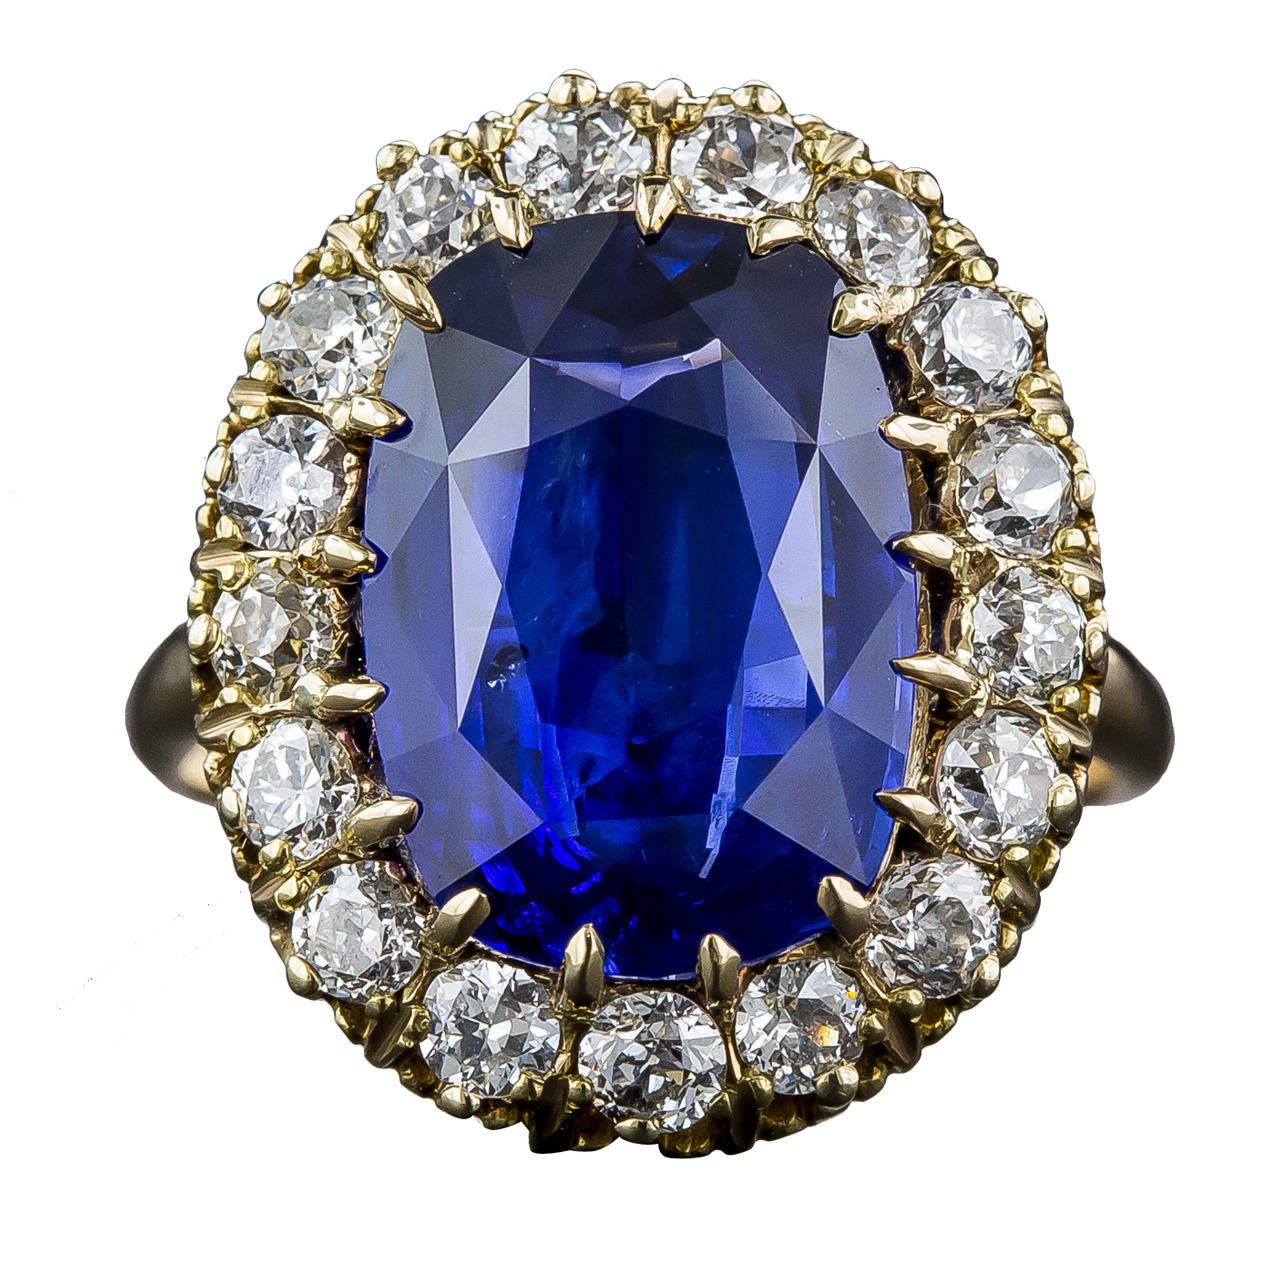 7.68 Carat Sapphire Diamond Antique Cluster Ring For Sale